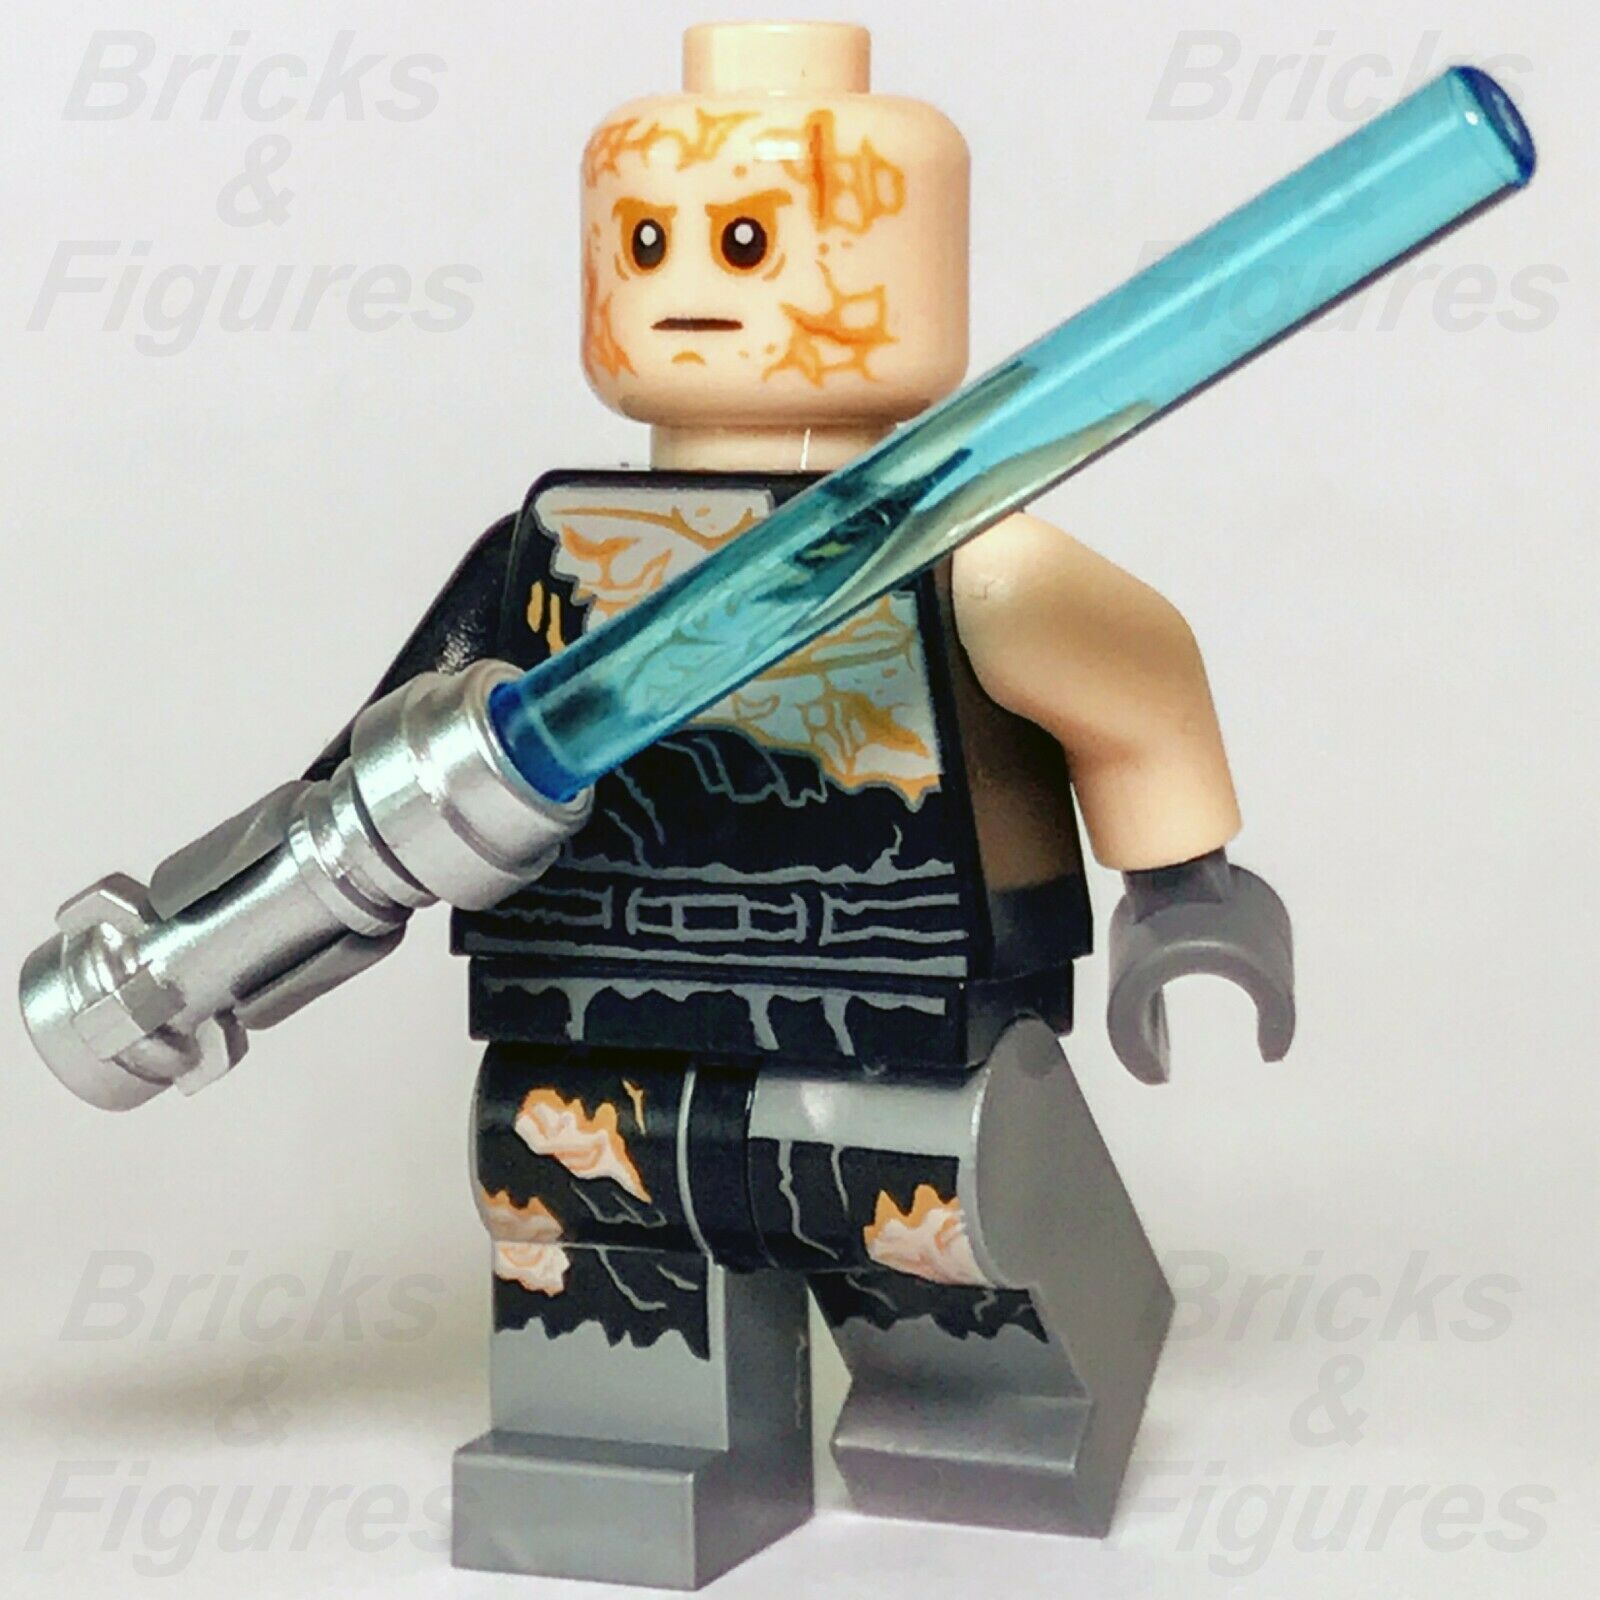 New Star Wars LEGO Anakin Skywalker Darth Vader Transformation Minifigure 75183 - Bricks & Figures